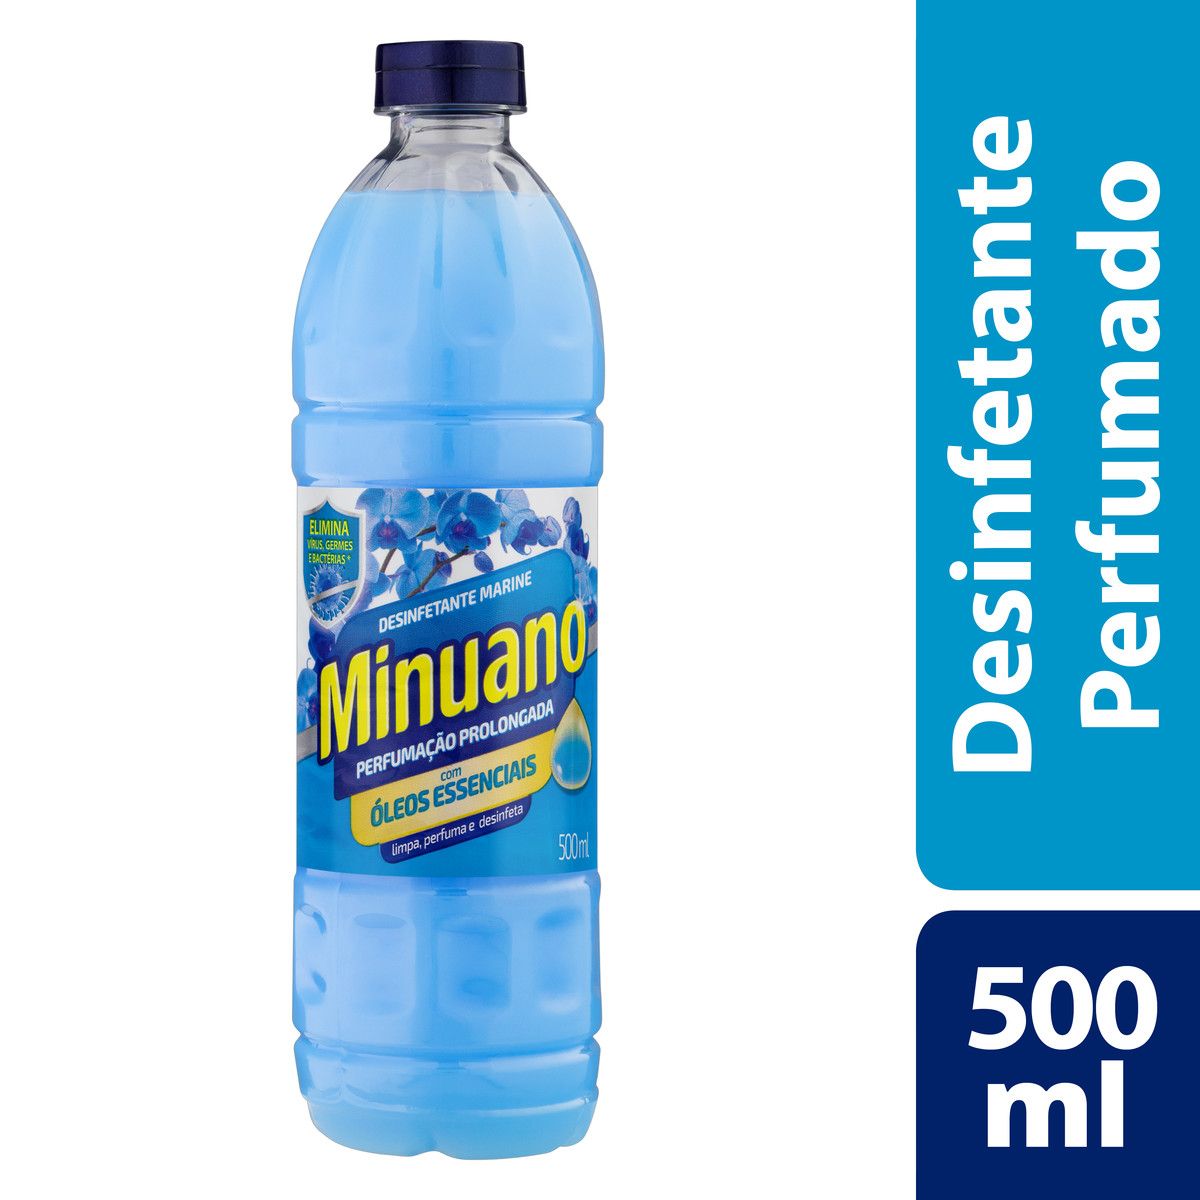 Desinfetante Minuano Marine 500ml image number 1